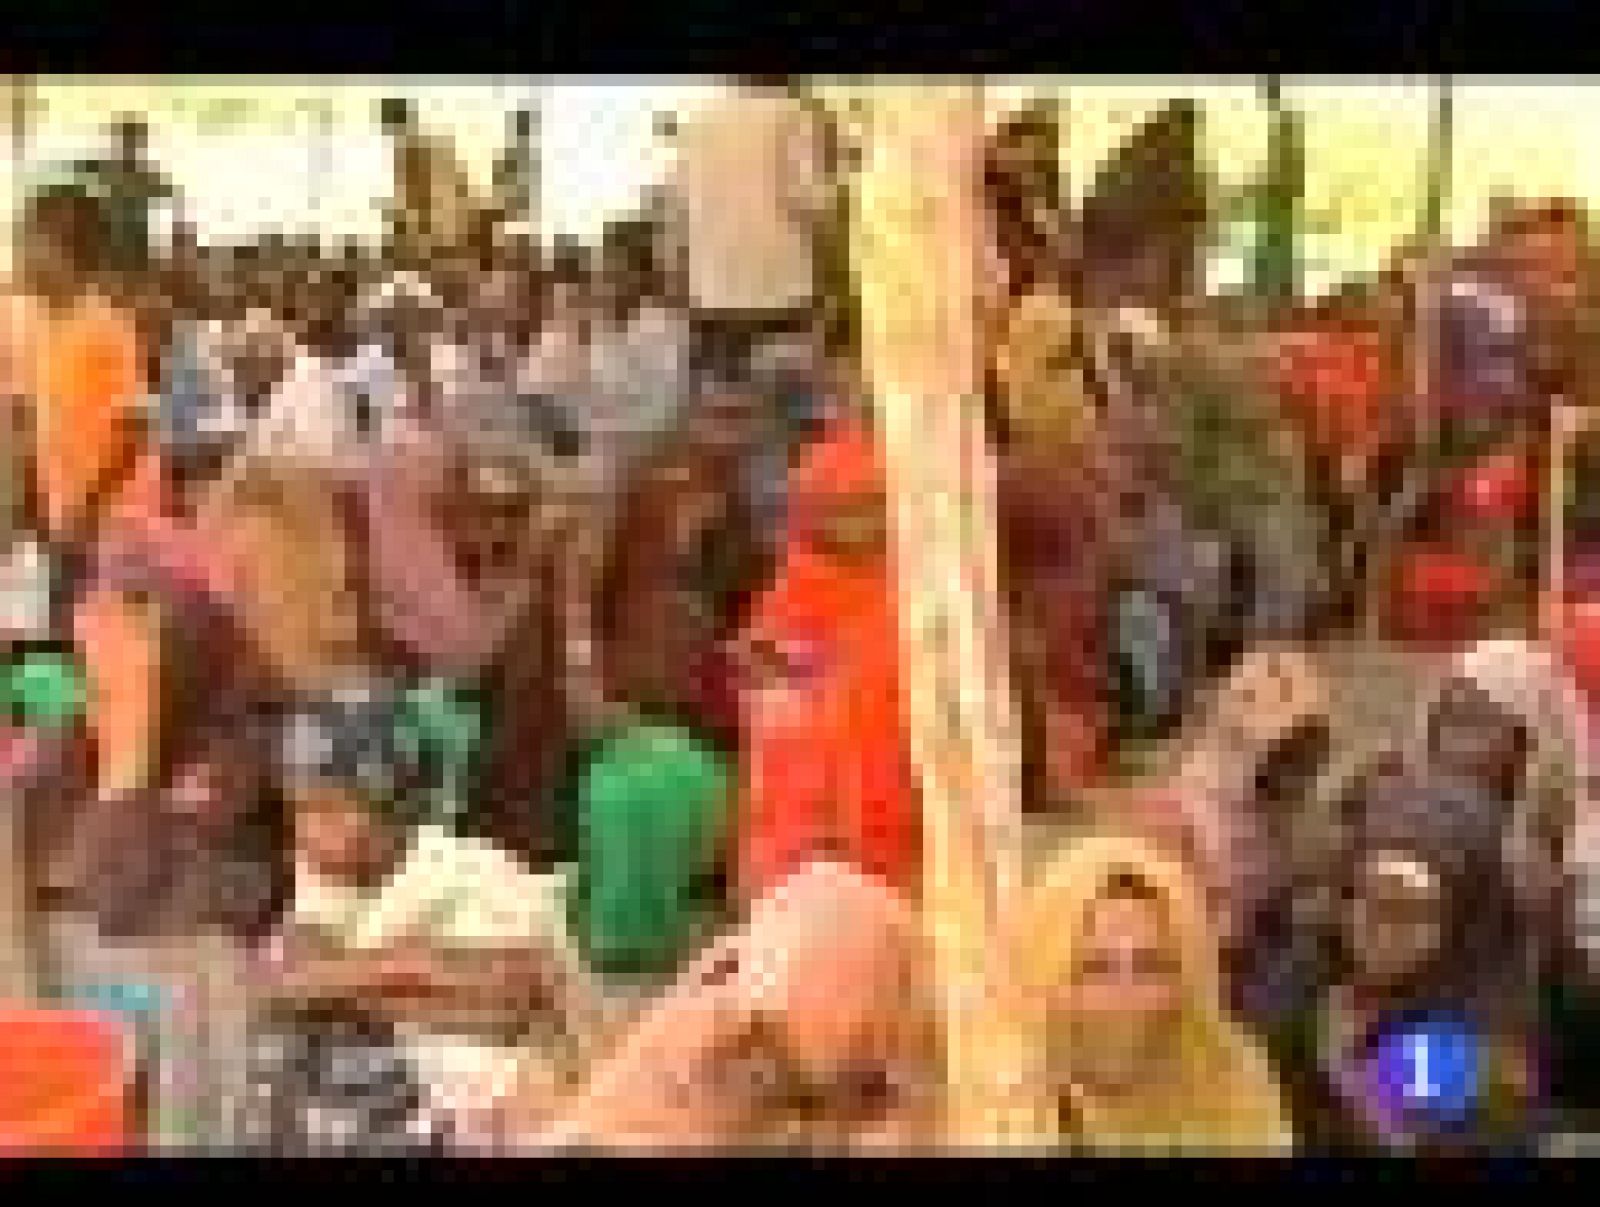 Telediario 1: La violencia empeora la hambruna en Somalia | RTVE Play